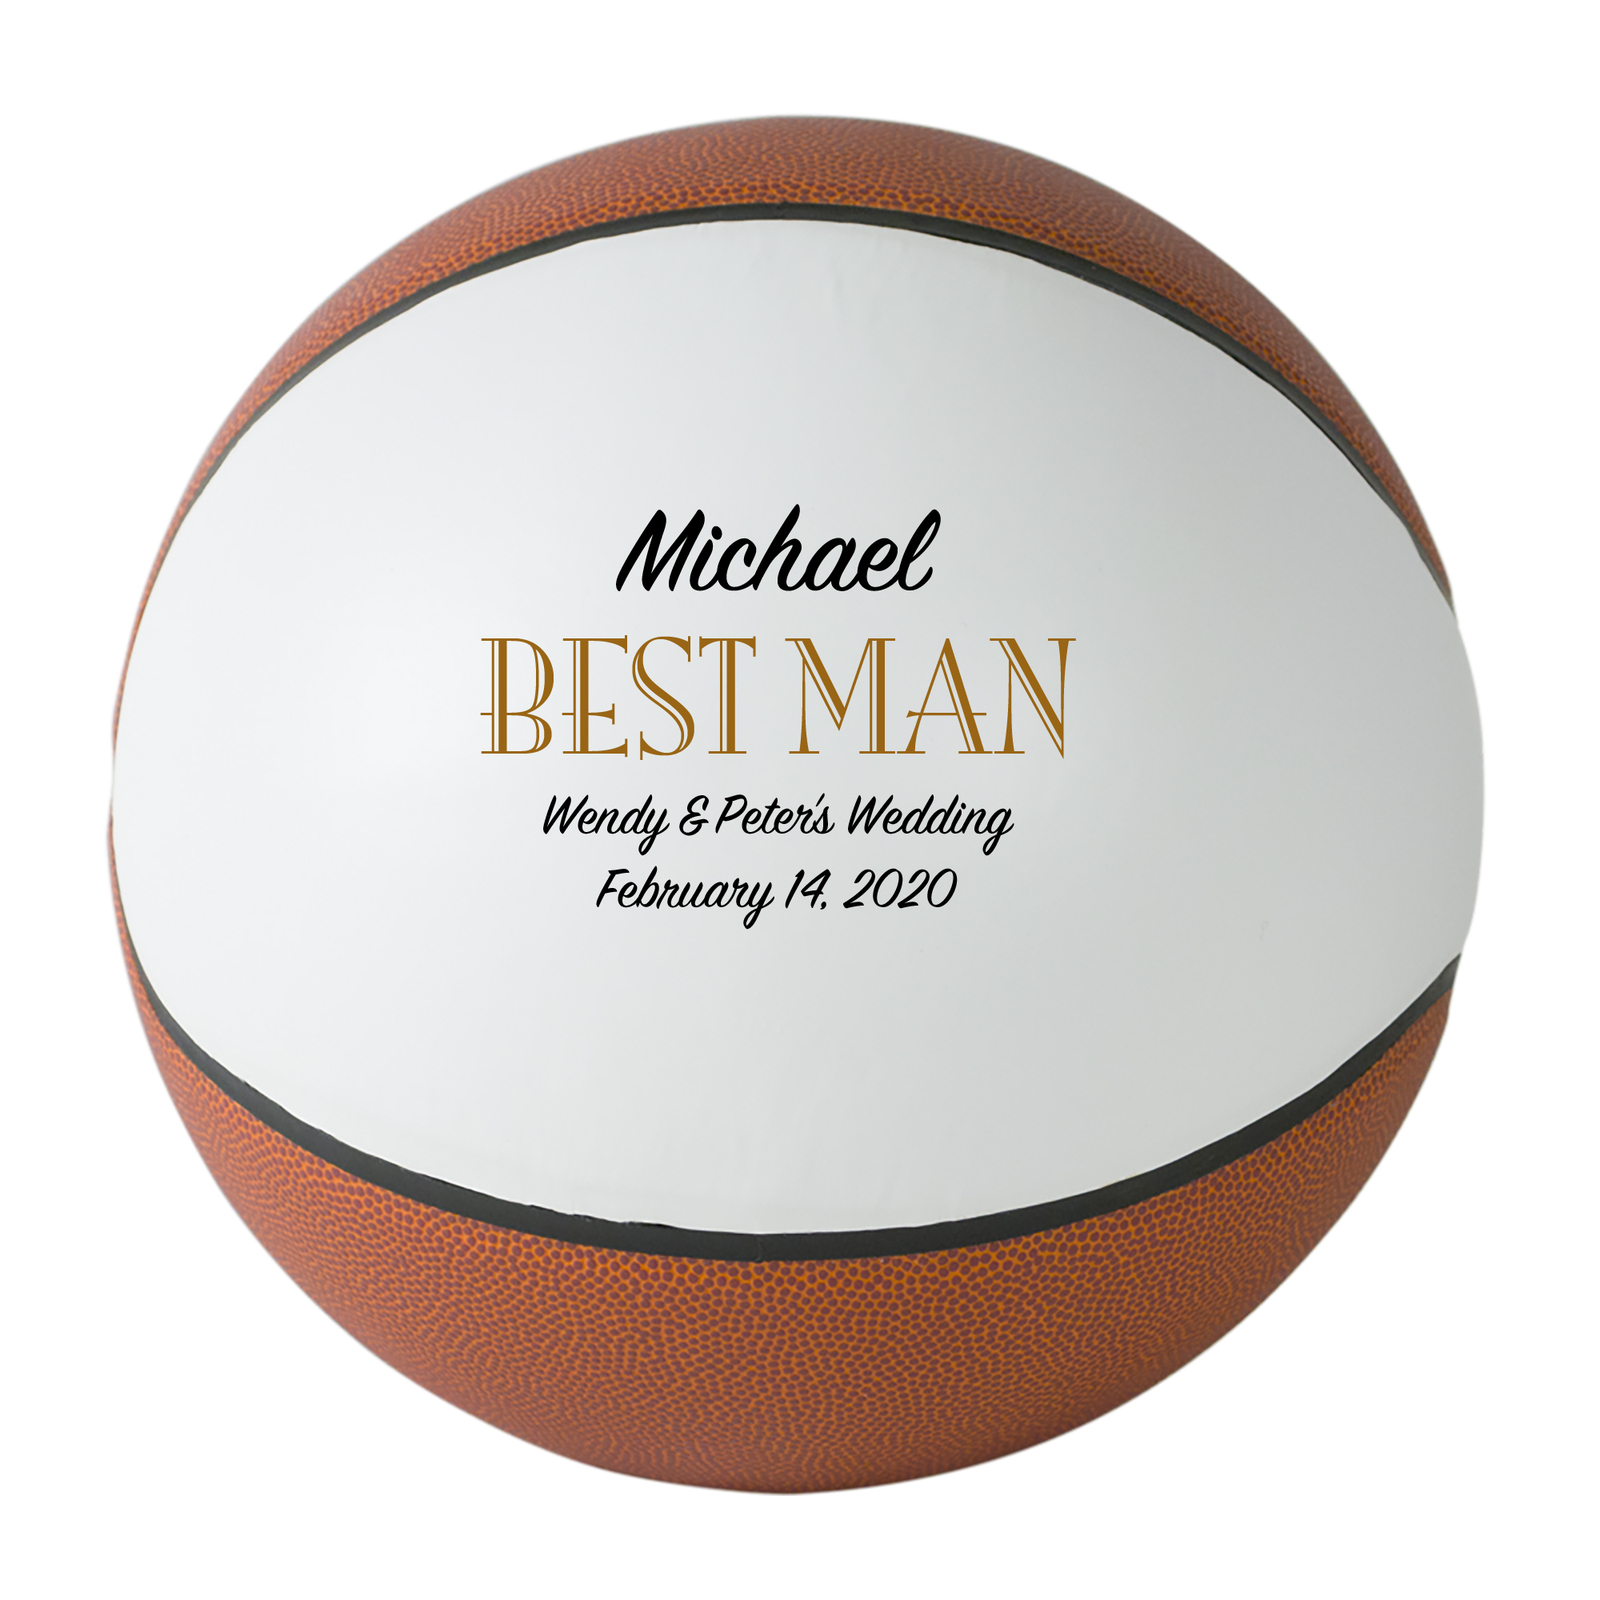 Best Man Regulation Basketball Wedding Gift - Personalized Wedding Favor